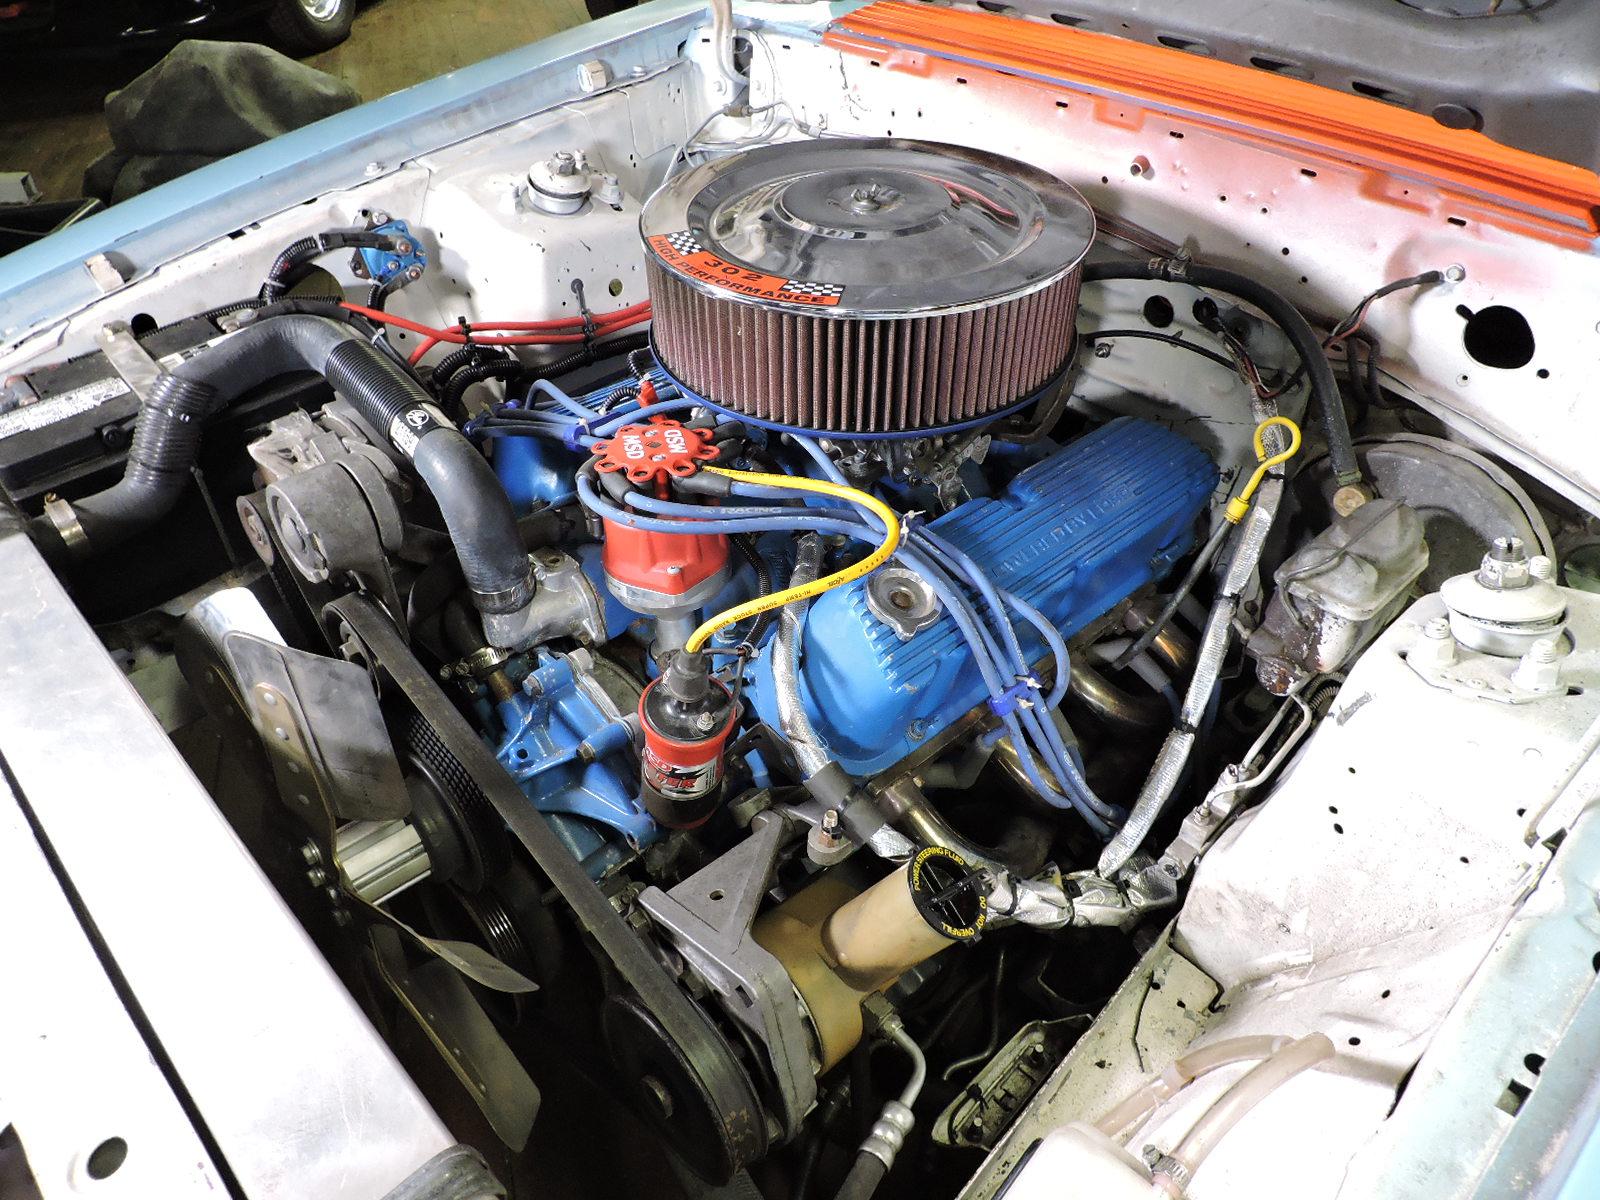 1983 Ford Mustang Modified Race Car / GULF Racing Paint-Scheme